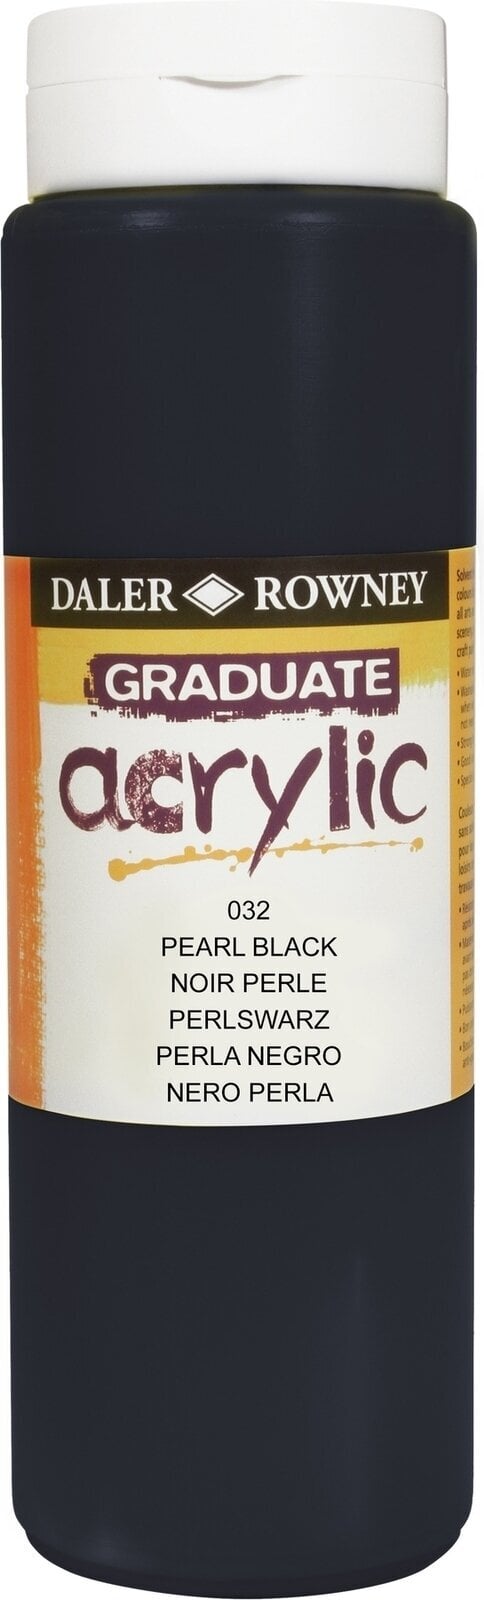 Akrylmaling Daler Rowney Graduate Akrylmaling Pearl Black 500 ml 1 stk.